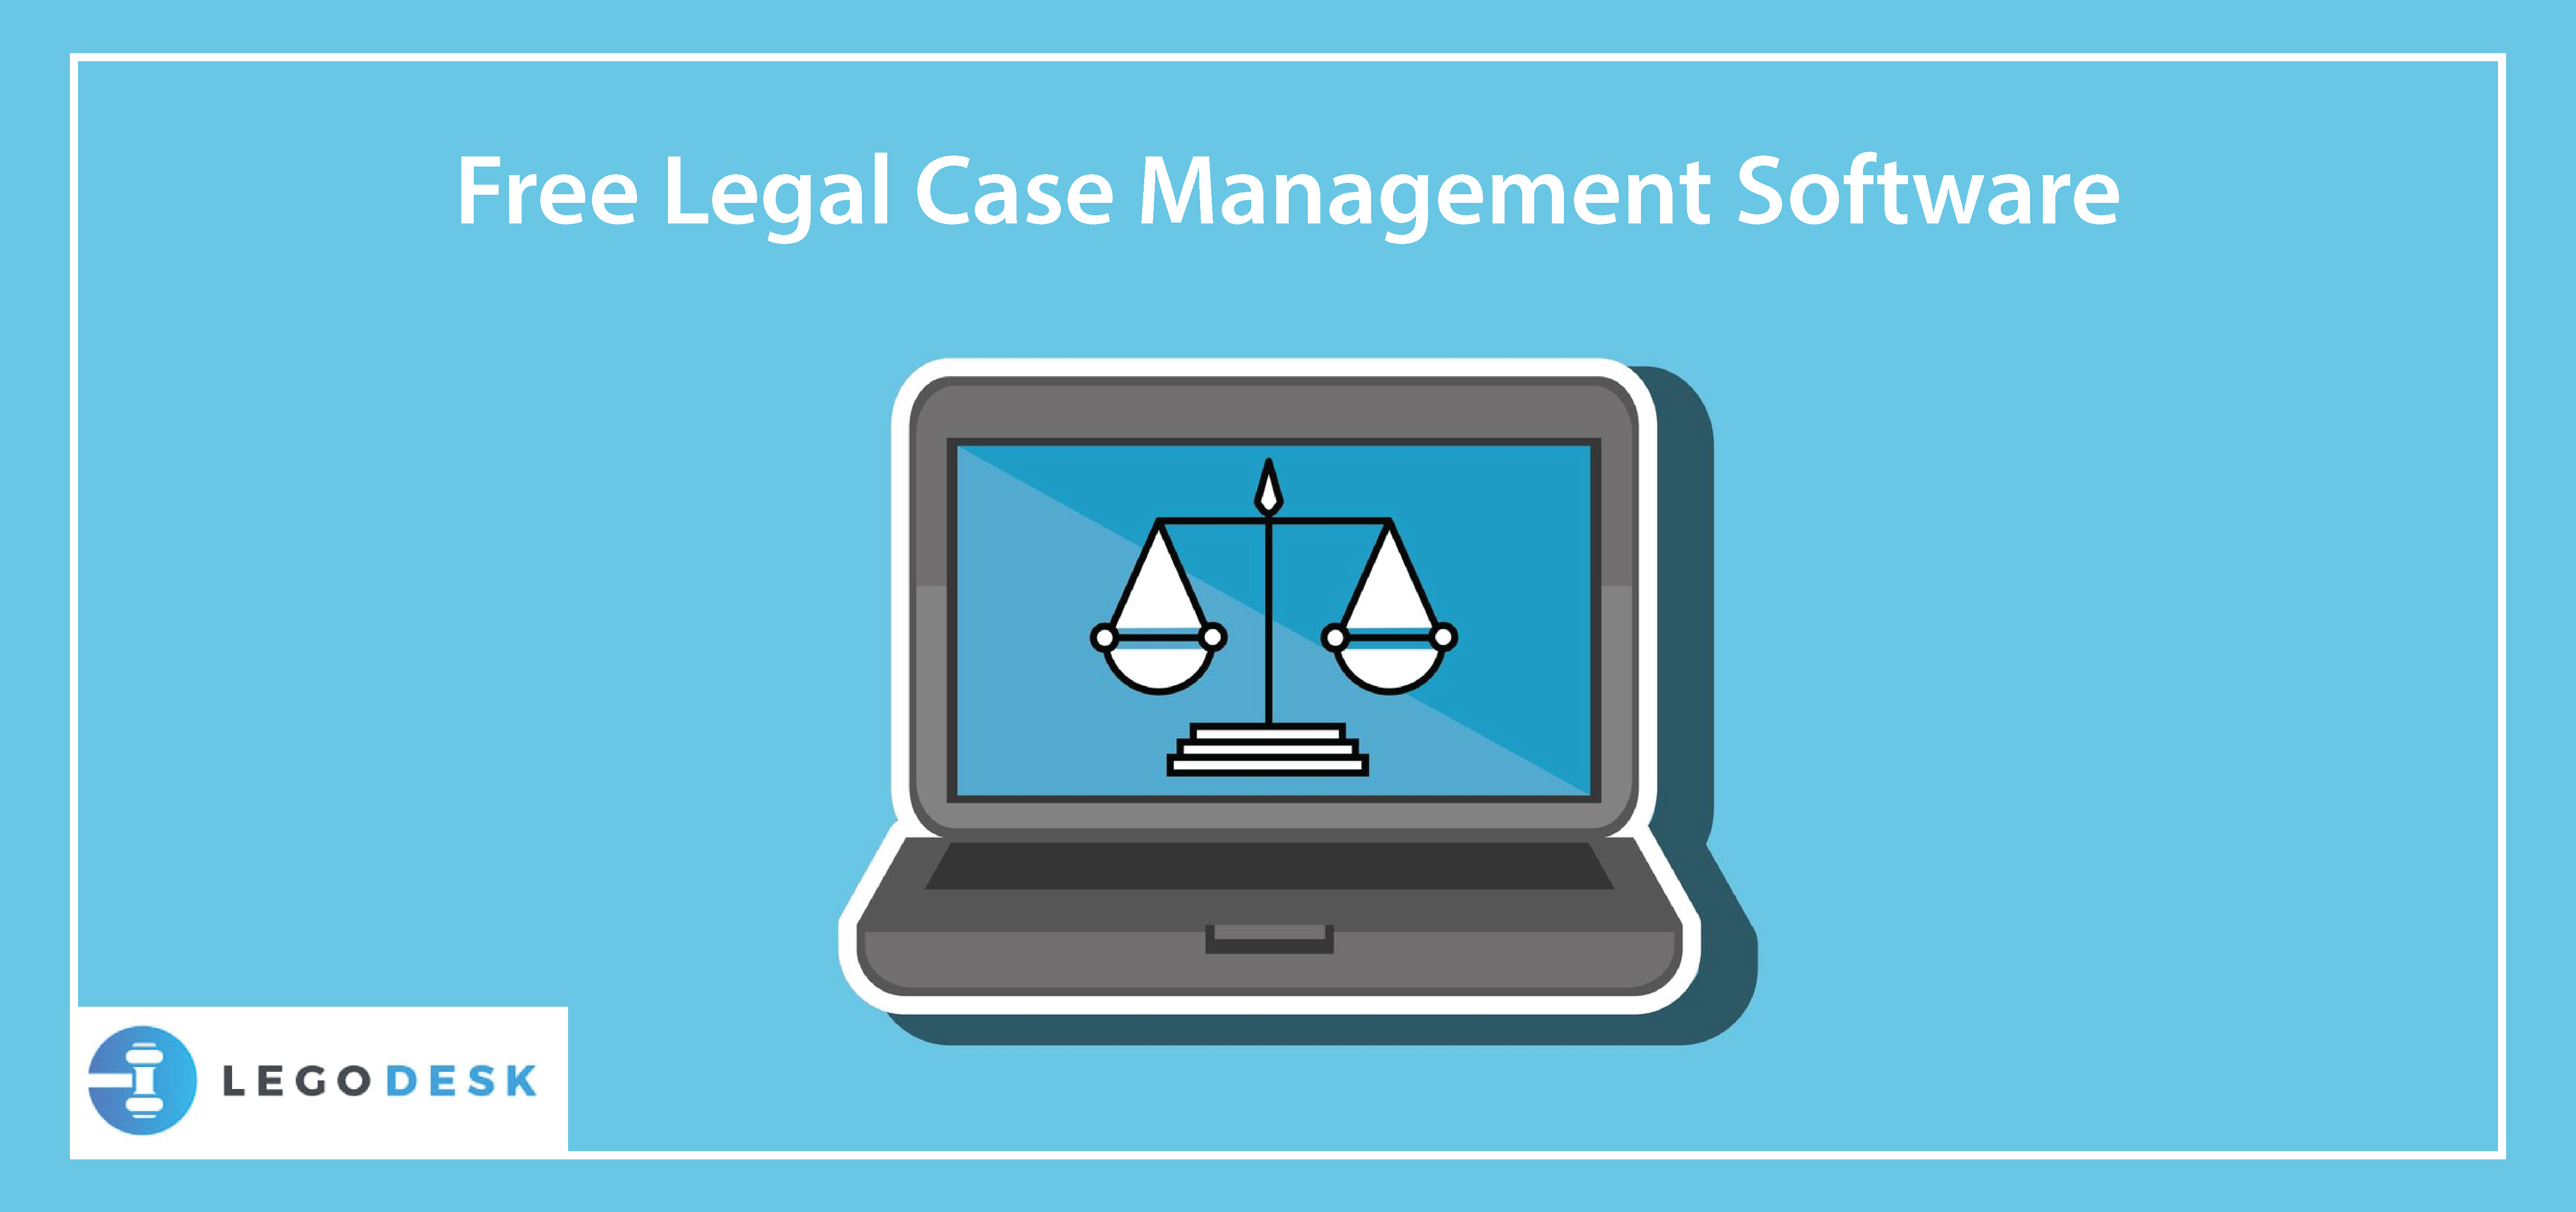 Free Legal Case Management Software